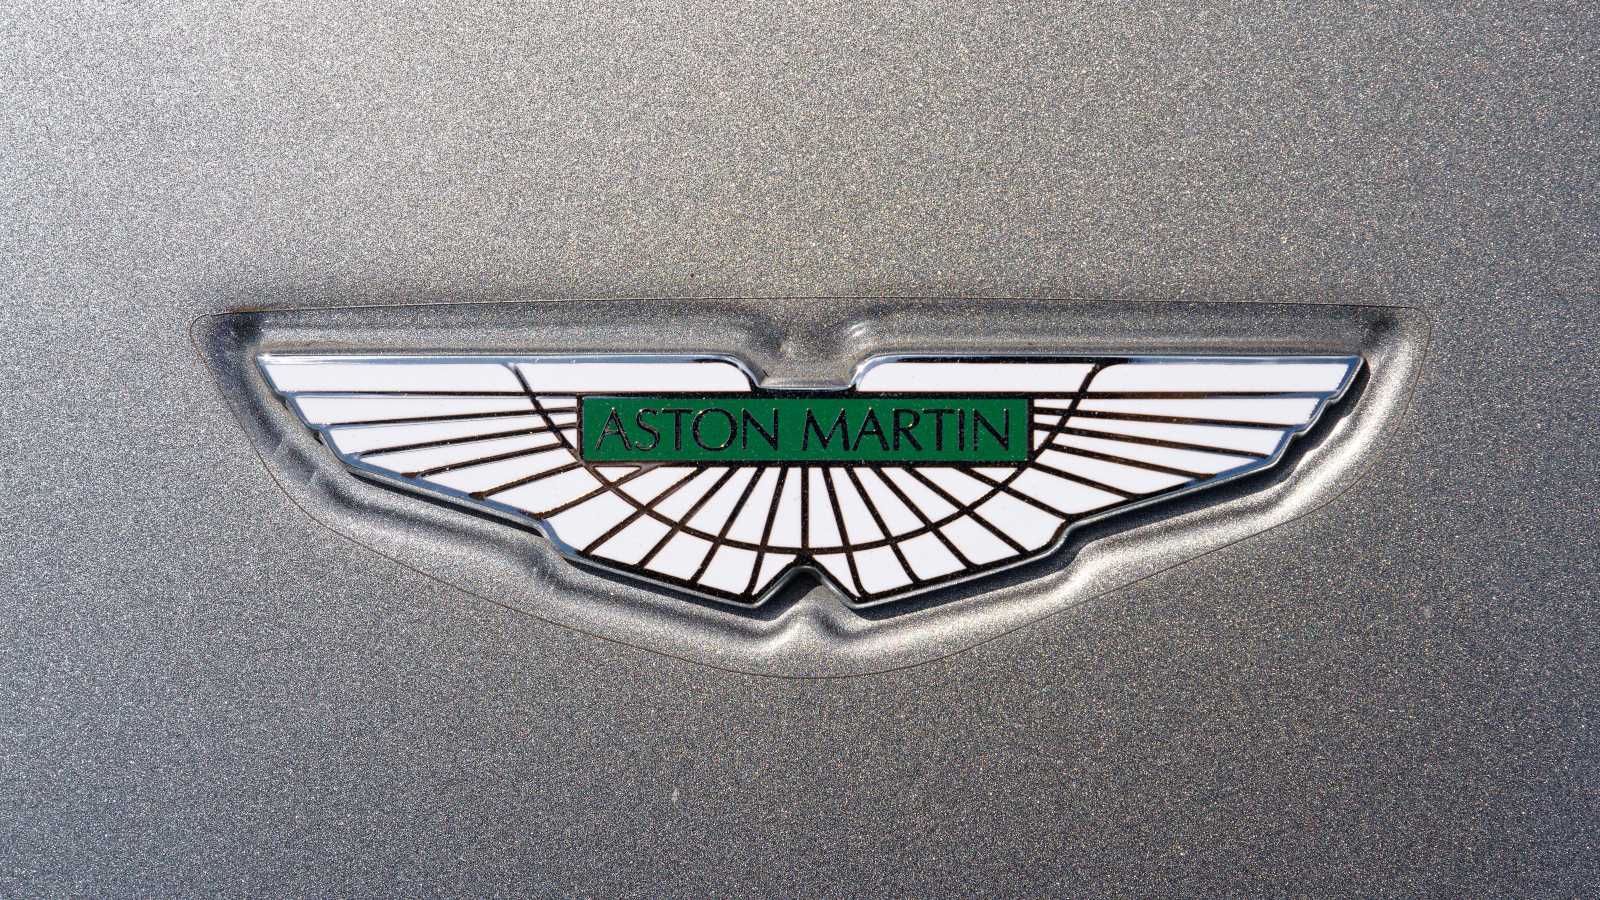 The badge of car manufacturer Aston Martin.